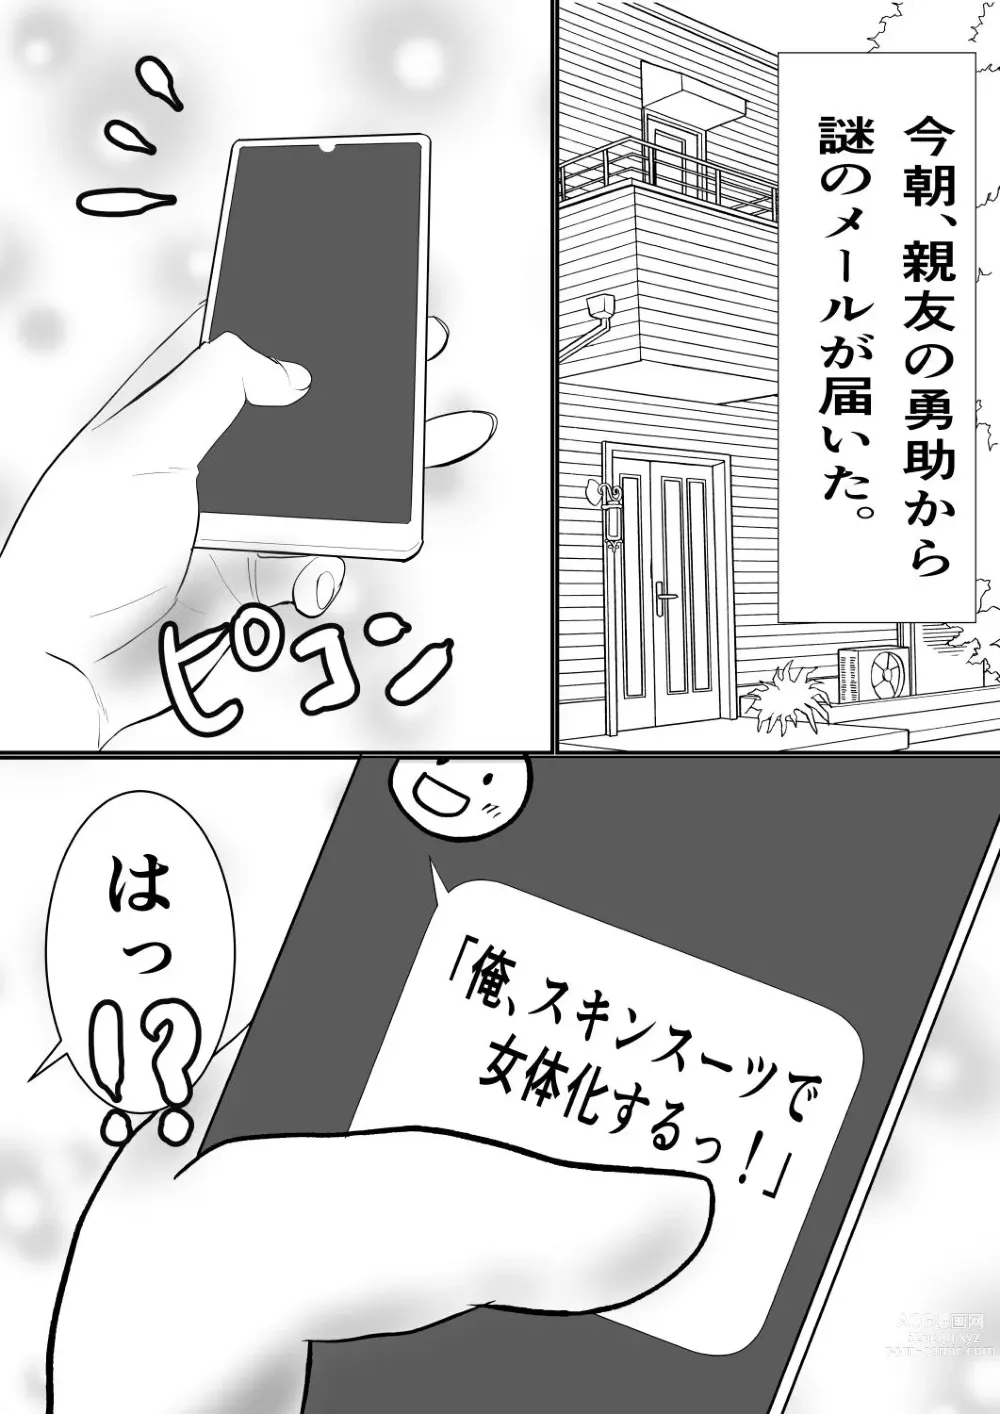 Page 1 of doujinshi 皮をかぶった親友が最高のセフレになった話。